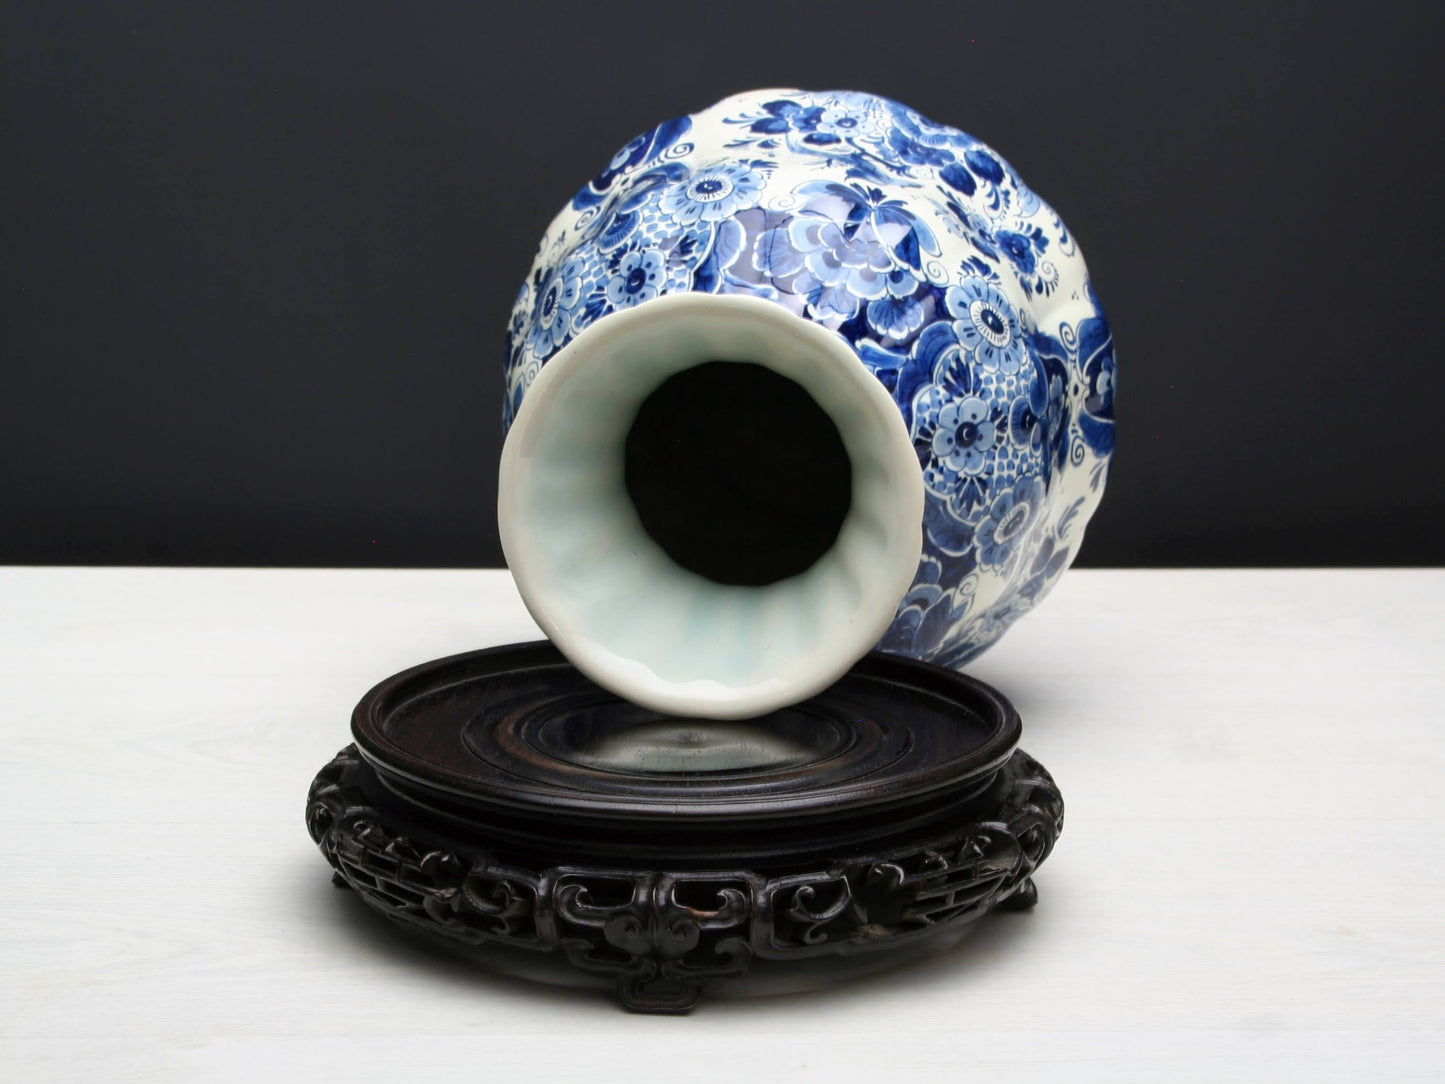 Delft Blue and White Vase with Wood Stand | Ceramic Vase for Home Decorations | Vintage Decor Flower Vase